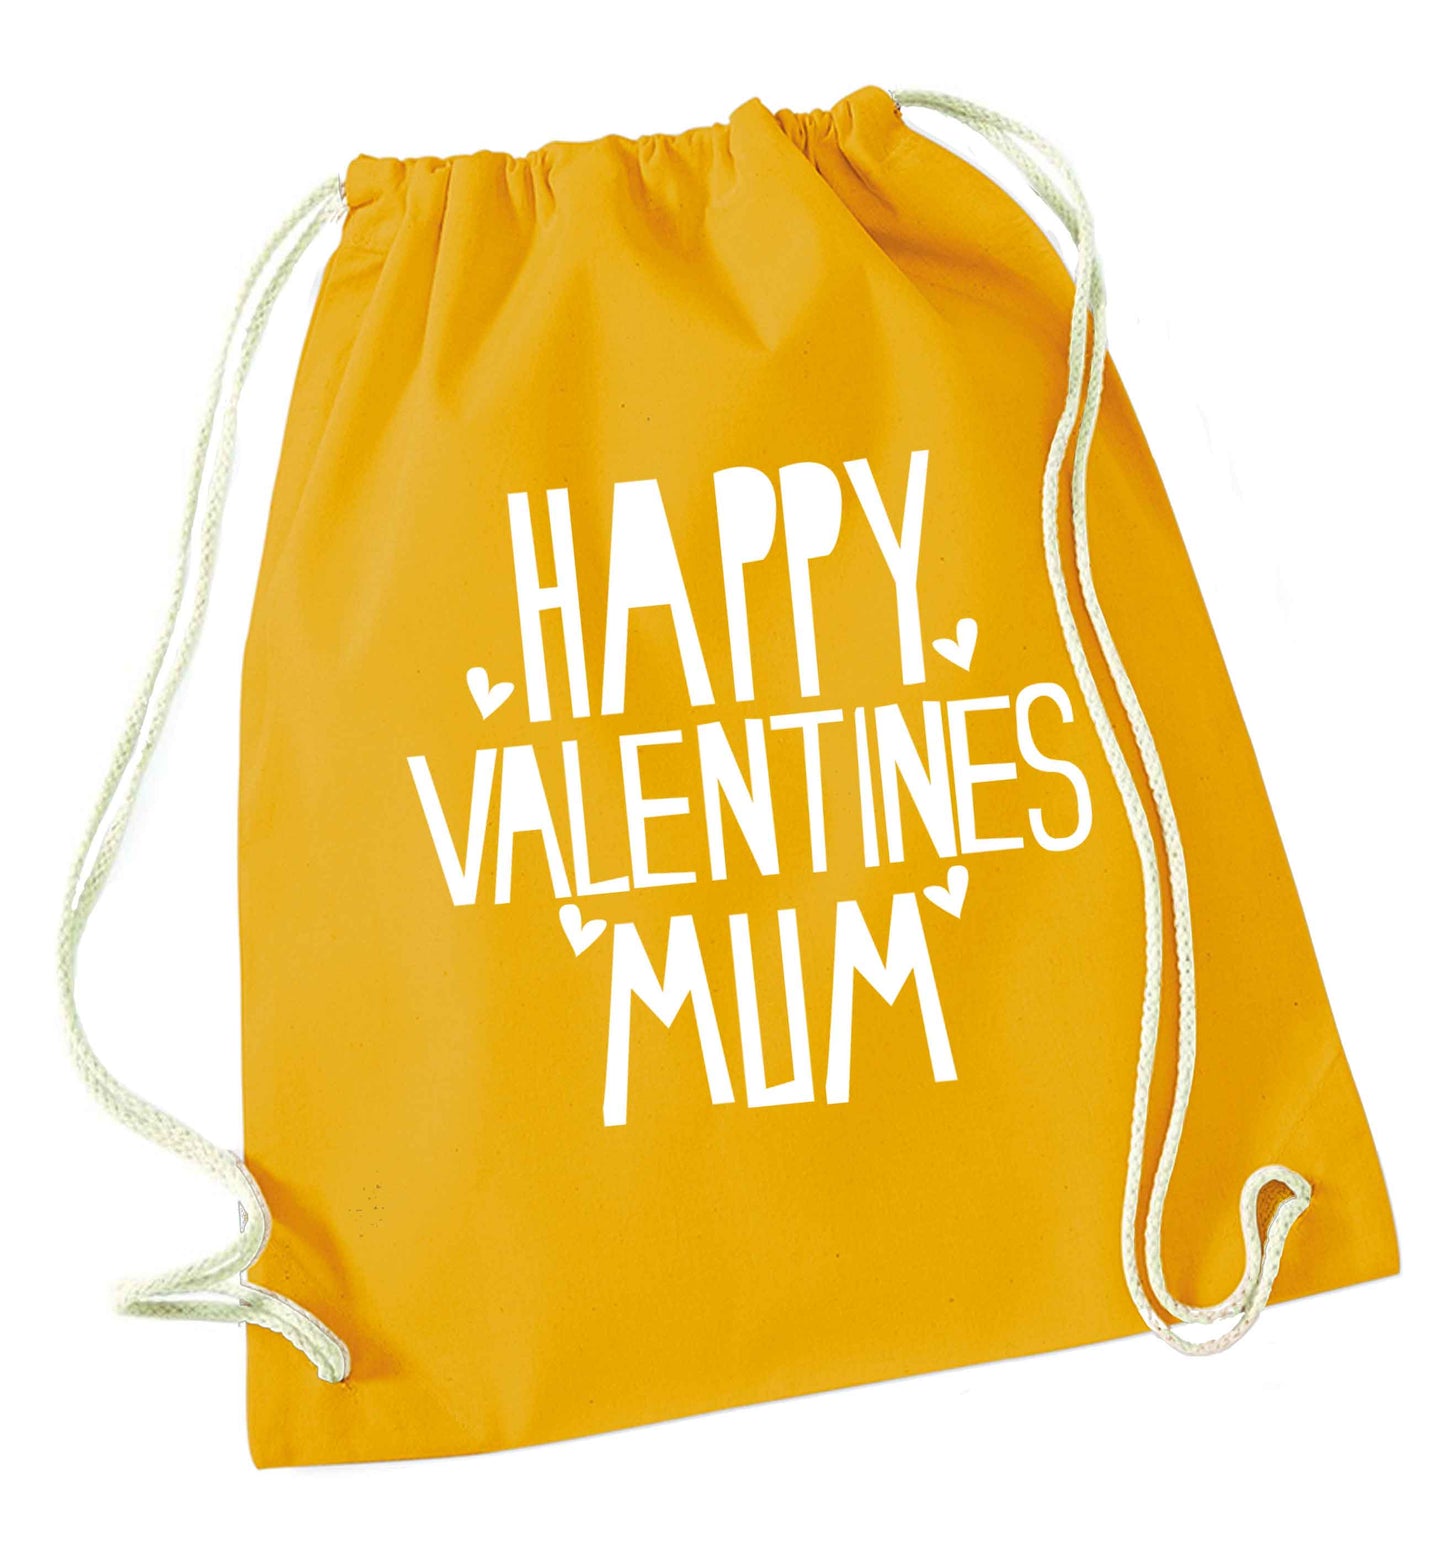 Happy valentines mum mustard drawstring bag